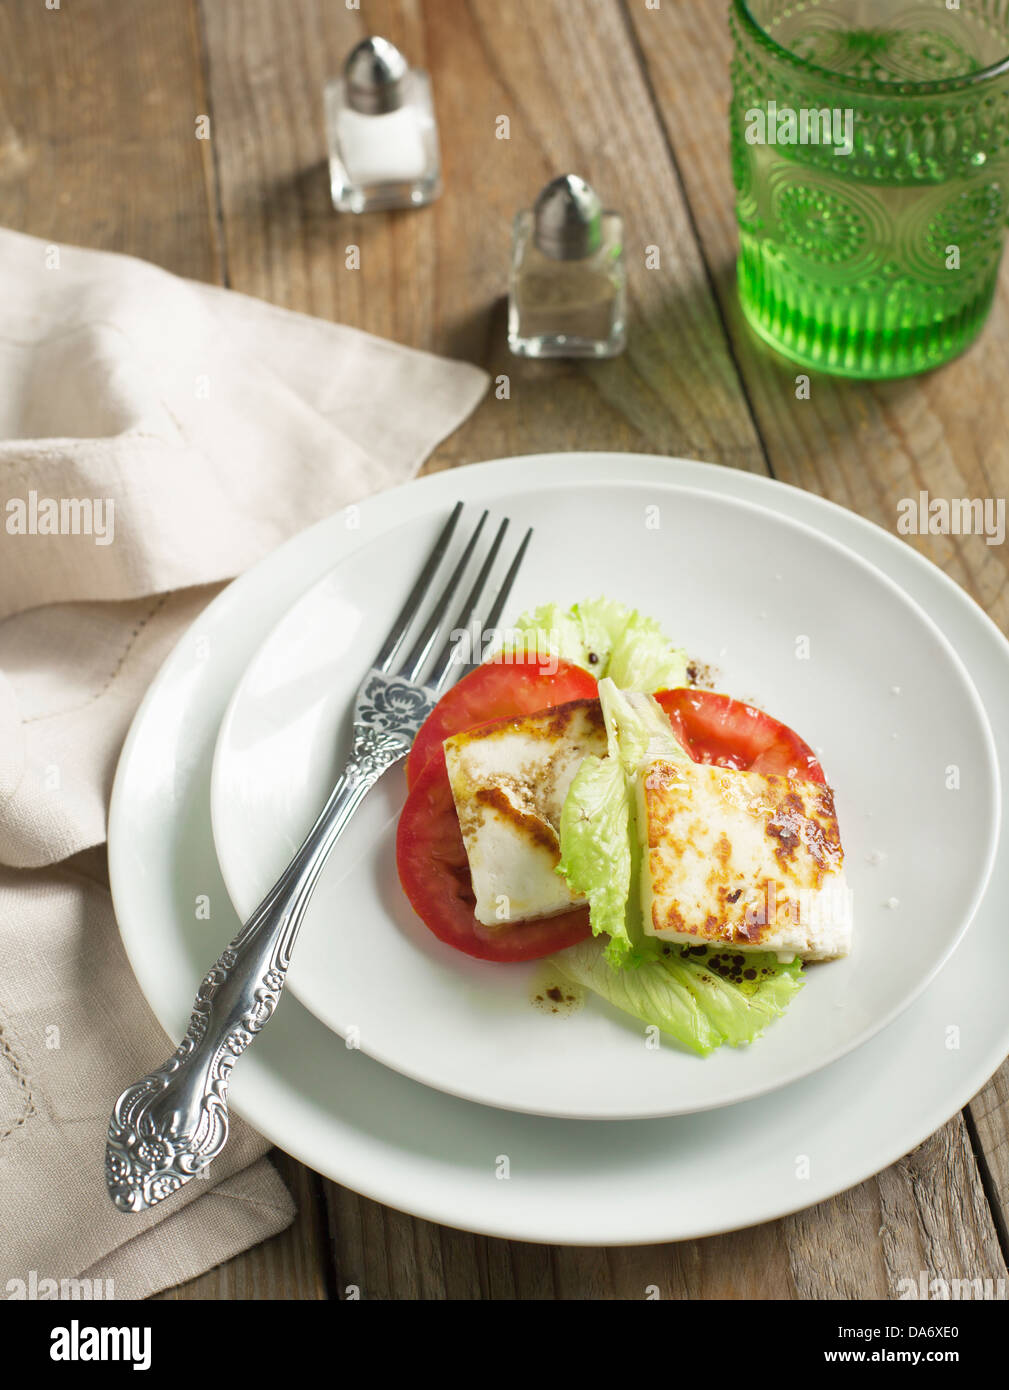 Fried Halloumi Cheese and tomato salad Stock Photo